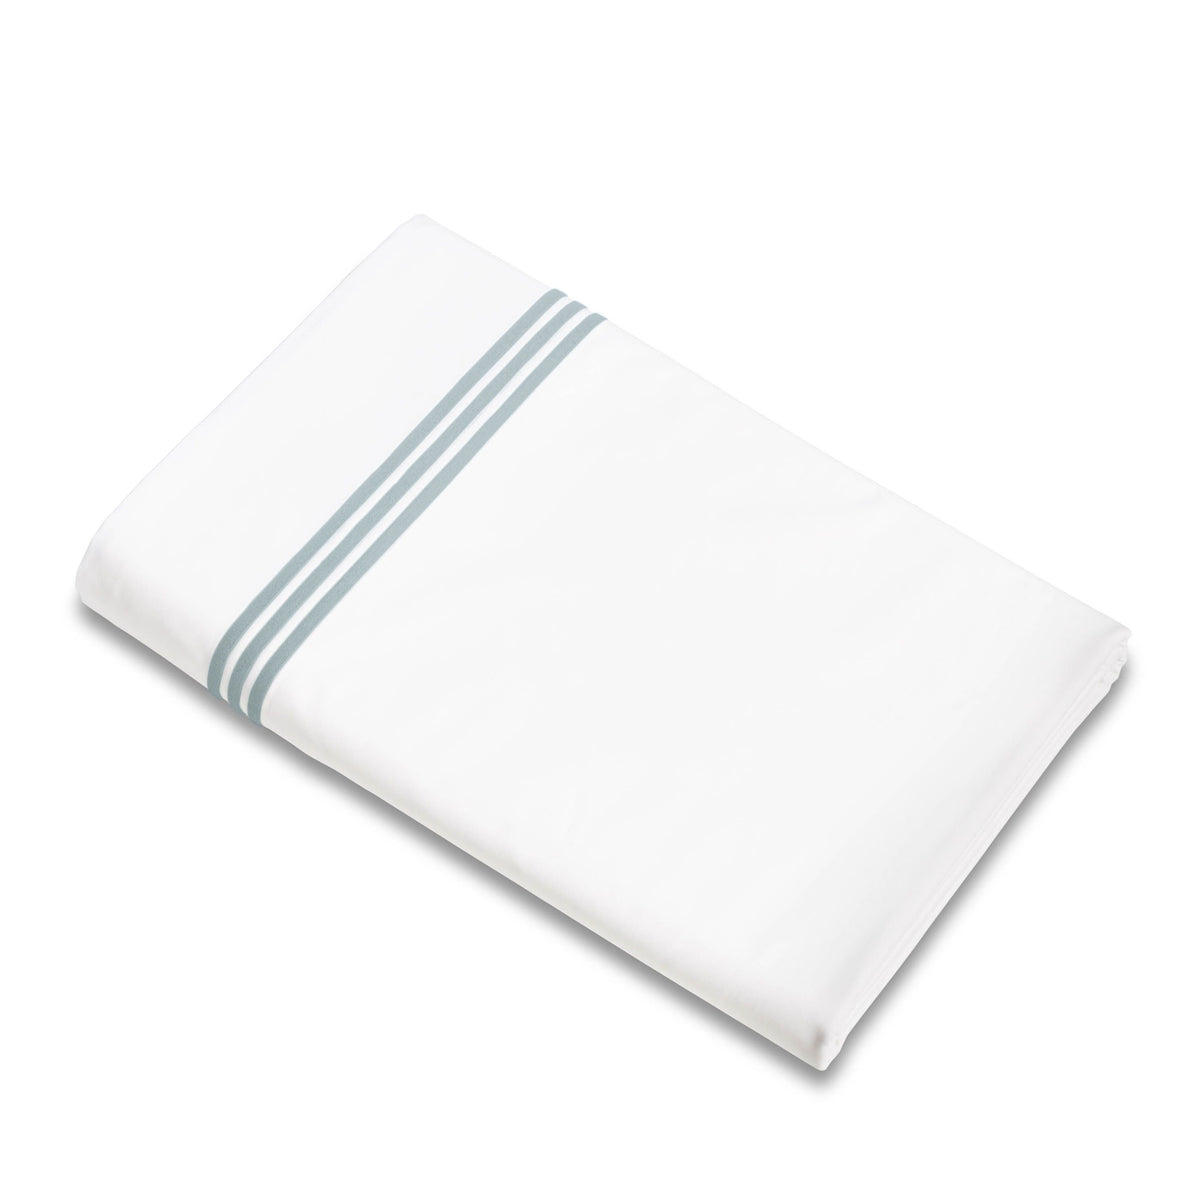 Flat Sheet of Signoria Platinum Percale Bedding in White/Wilton Blue Color